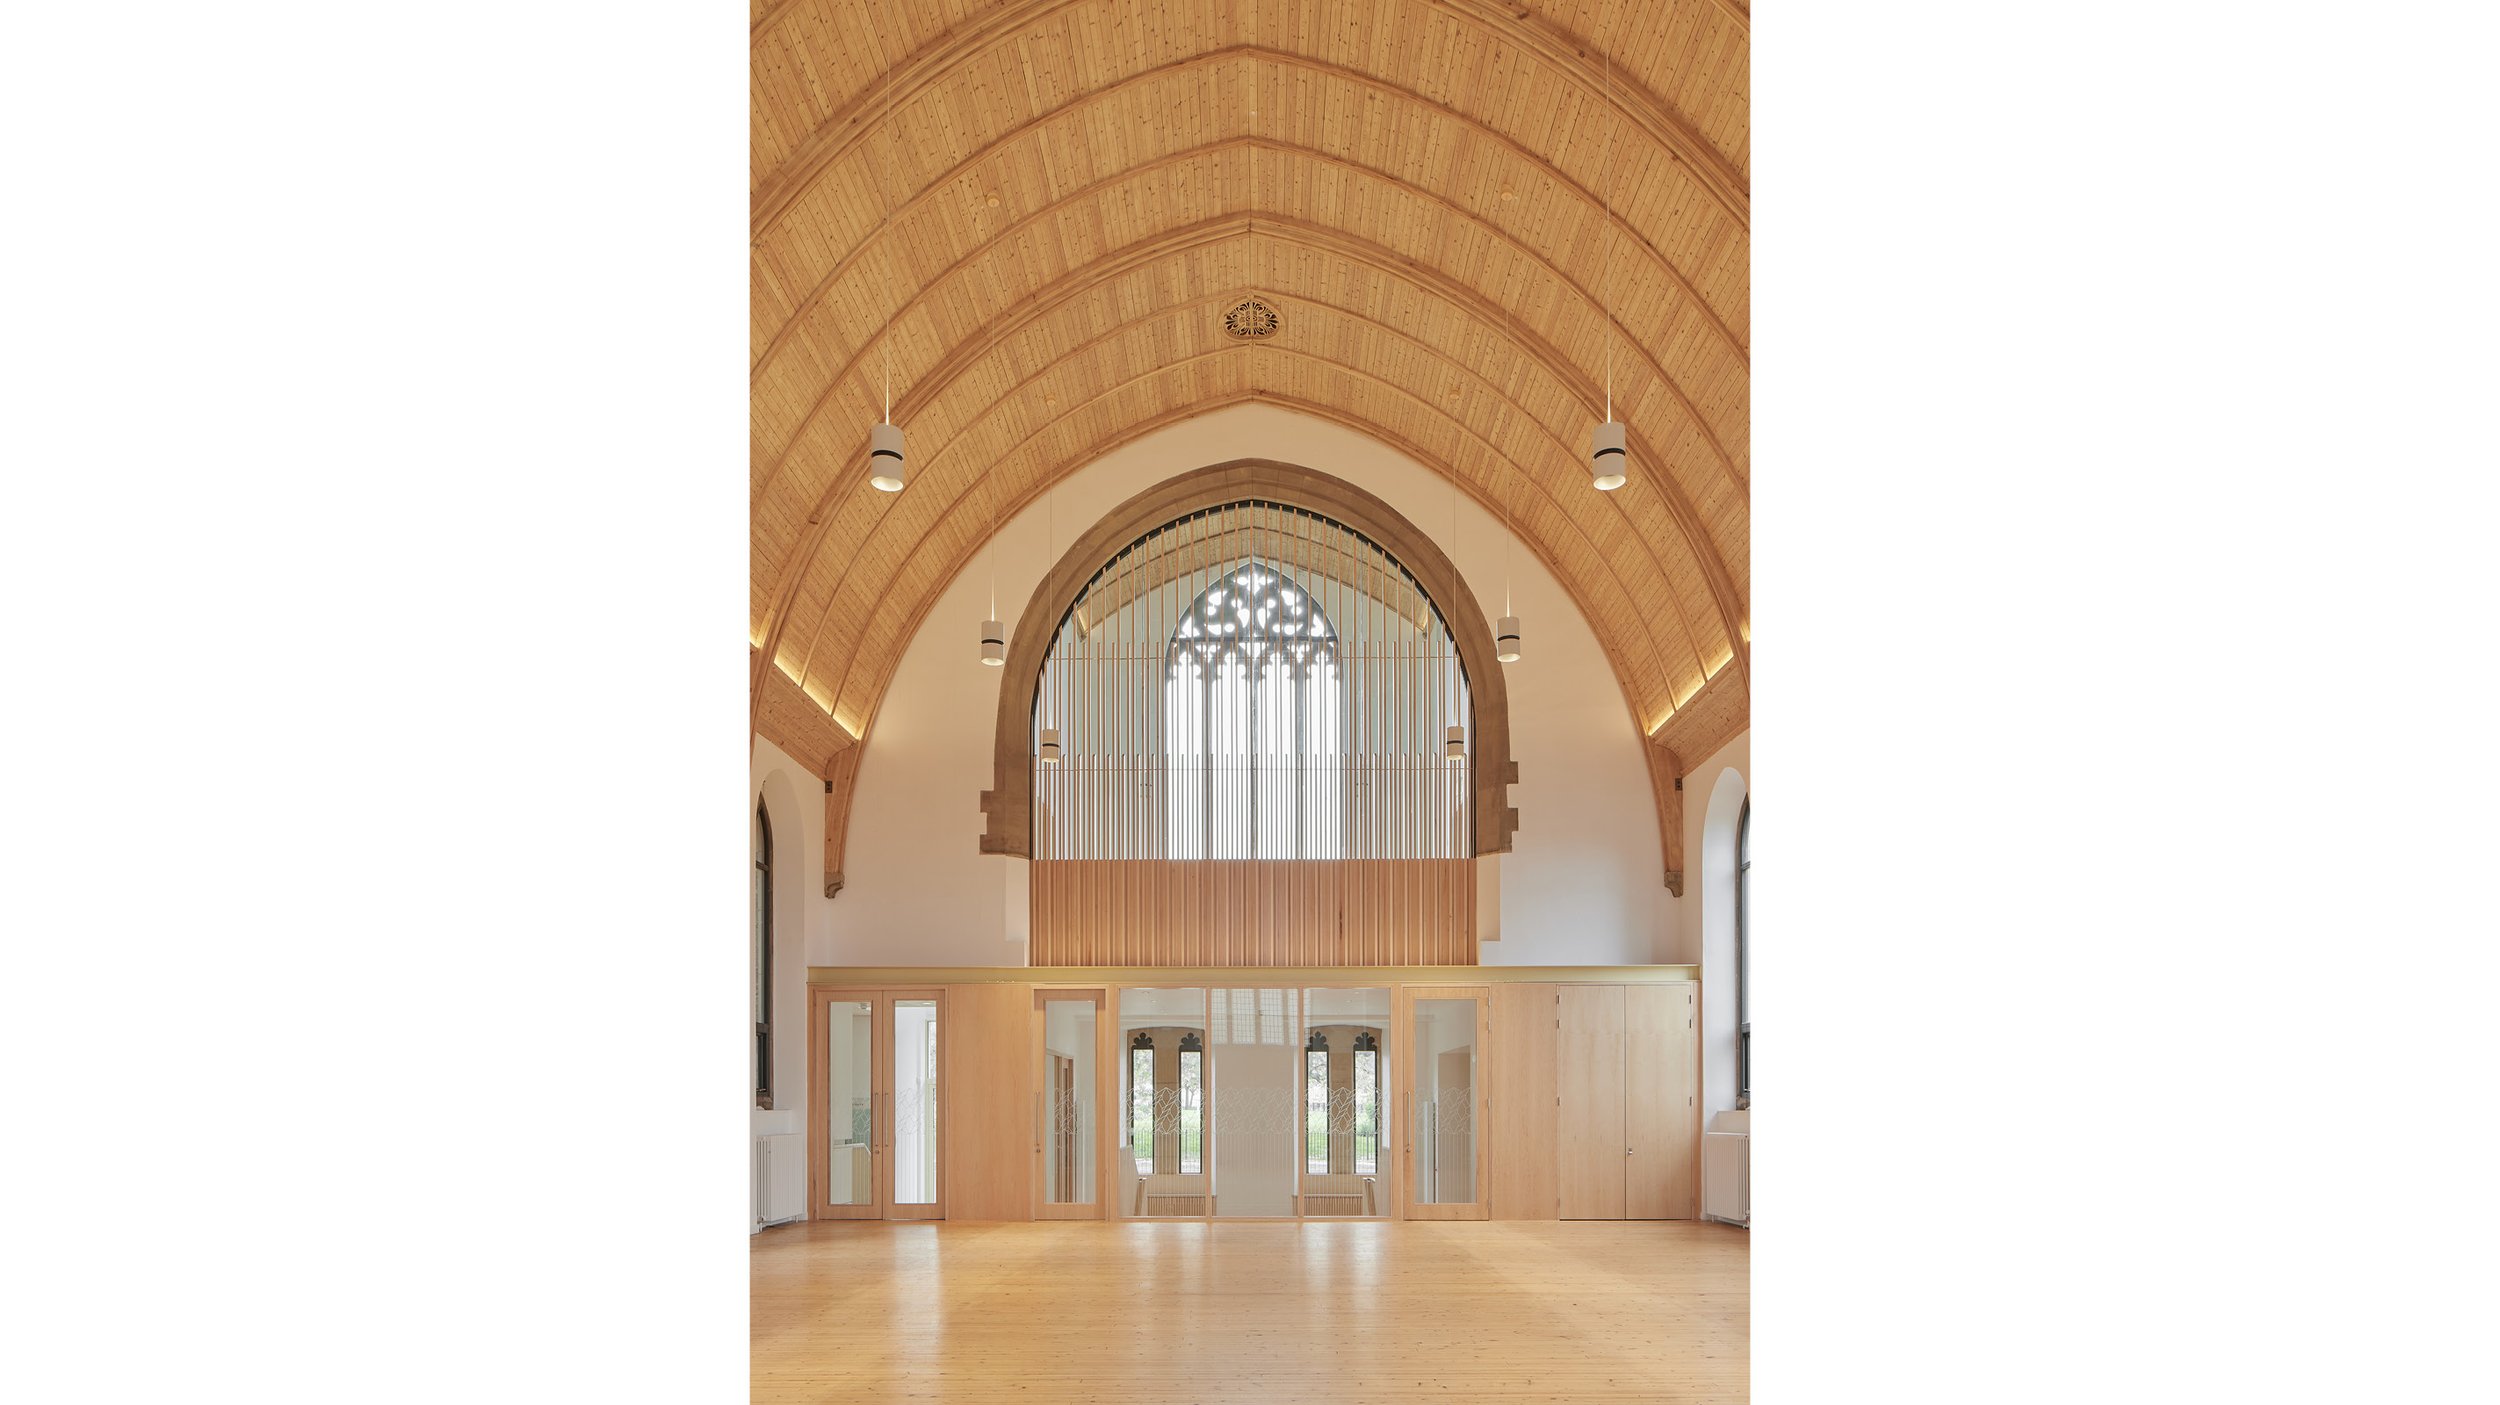 eaa-edinburgh-architectural-association-scotland-uk-awards-2022-winners-large-project-13.jpg